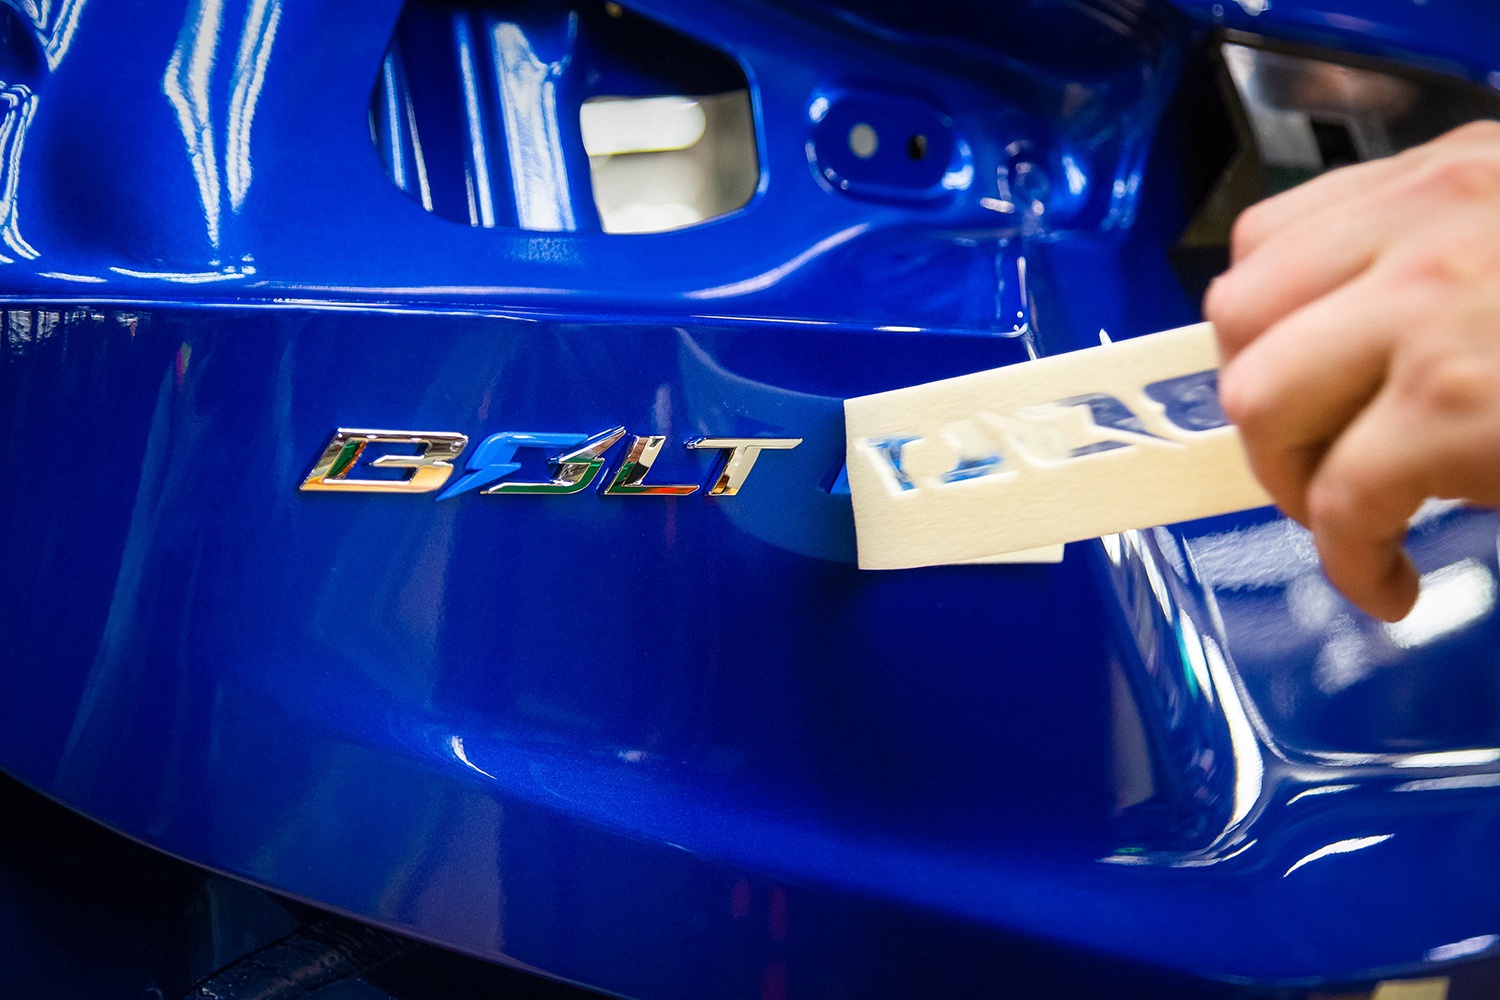 A teaser shot of the next-generation Chevrolet Bolt